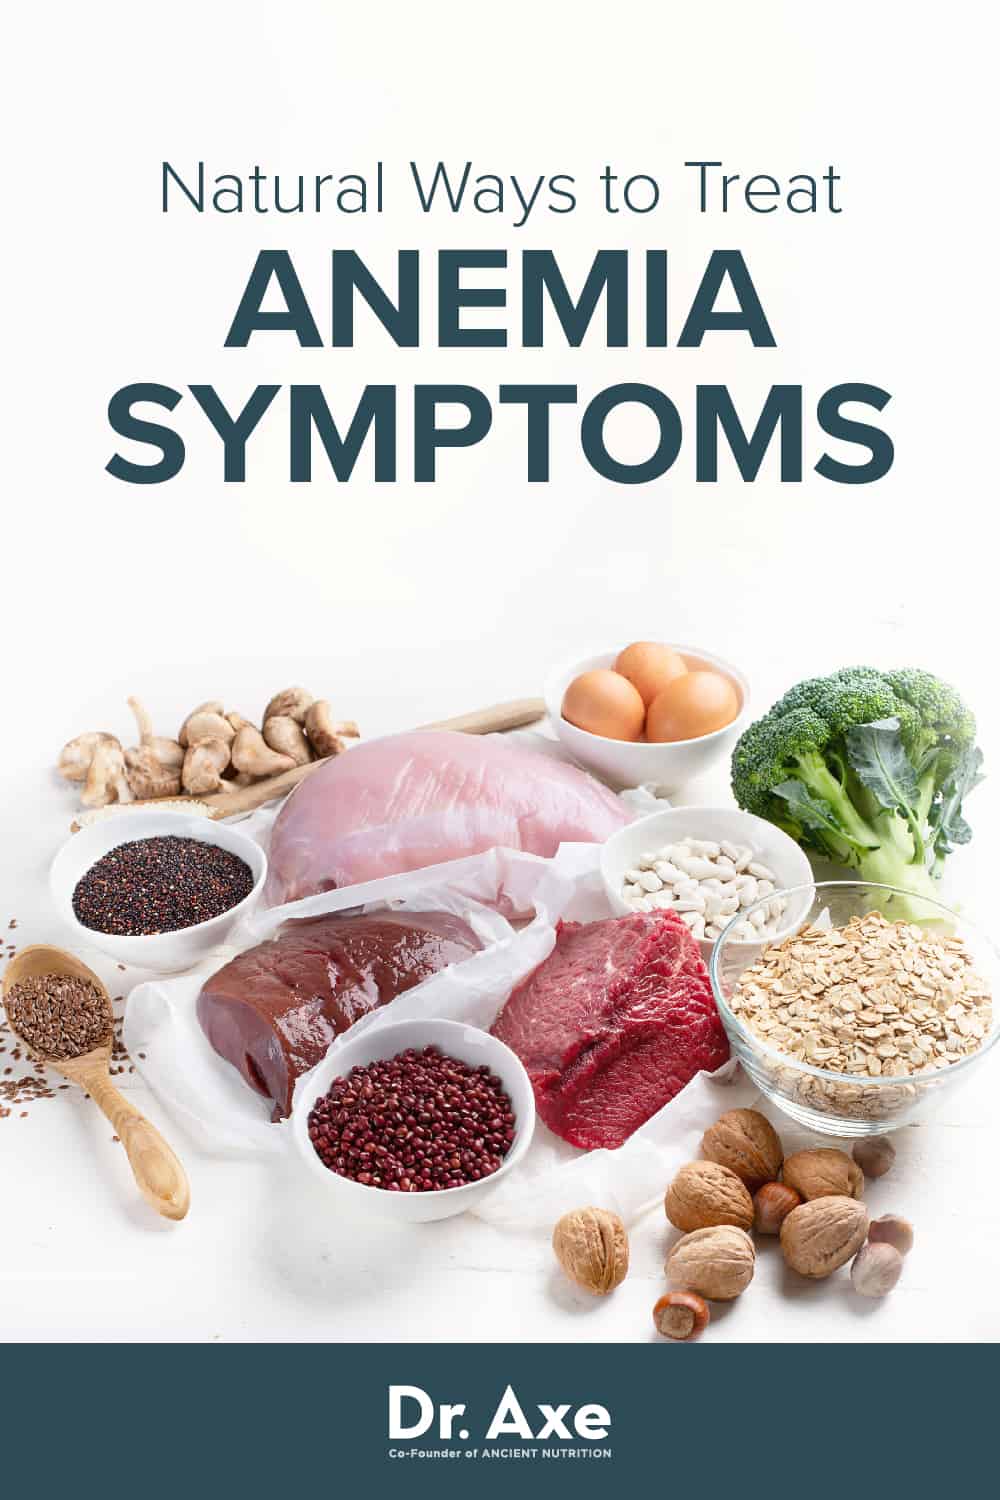 Anemia Symptoms Causes Risk Factors Treatments Dr Axe 8533